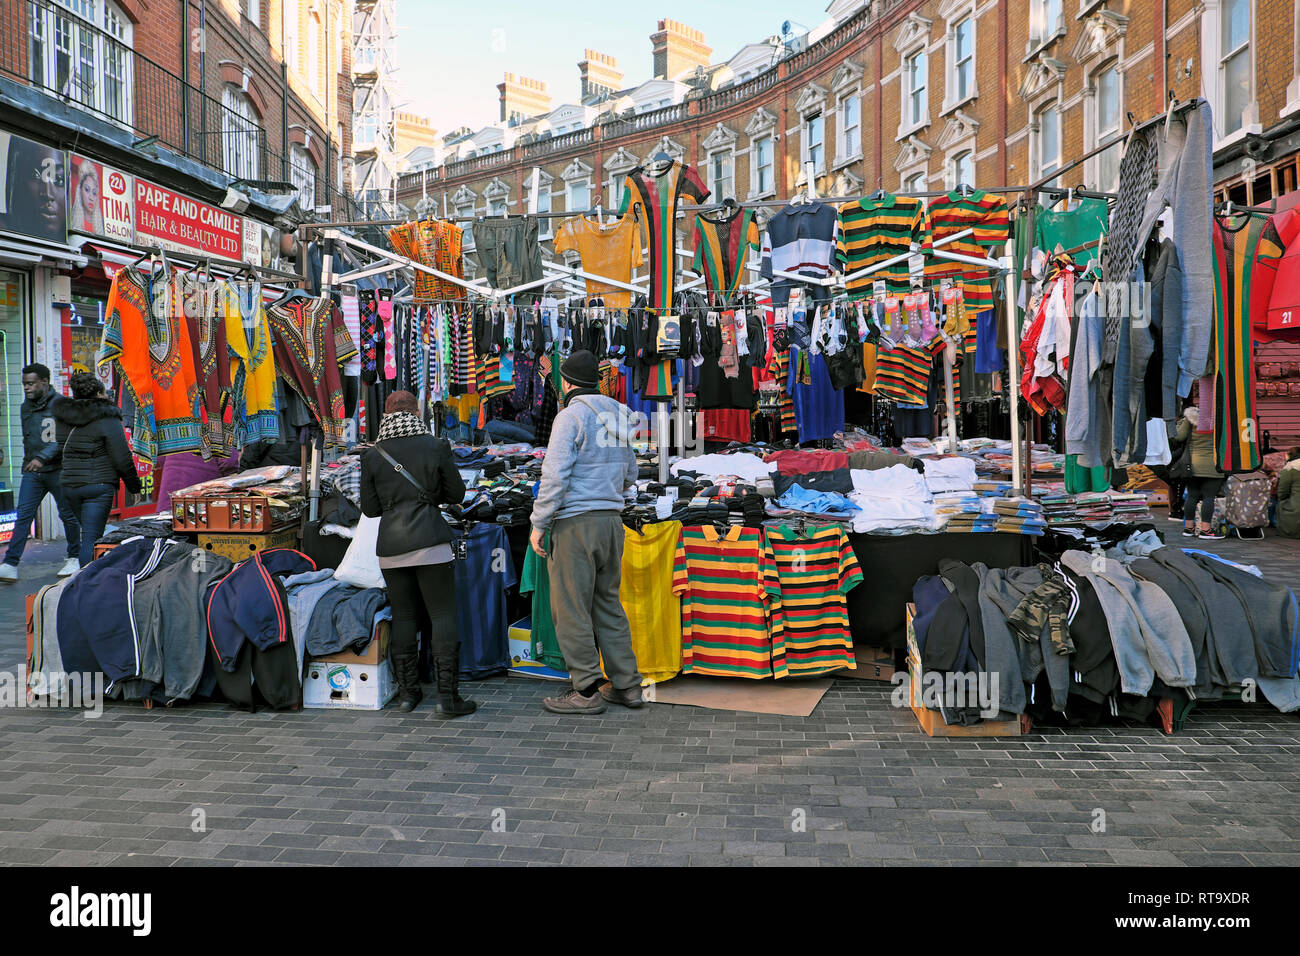 A market trader man selling mens clothing in Brixton street market scene Electric Avenue Brixton South London England UK   KATHY DEWITT Stock Photo